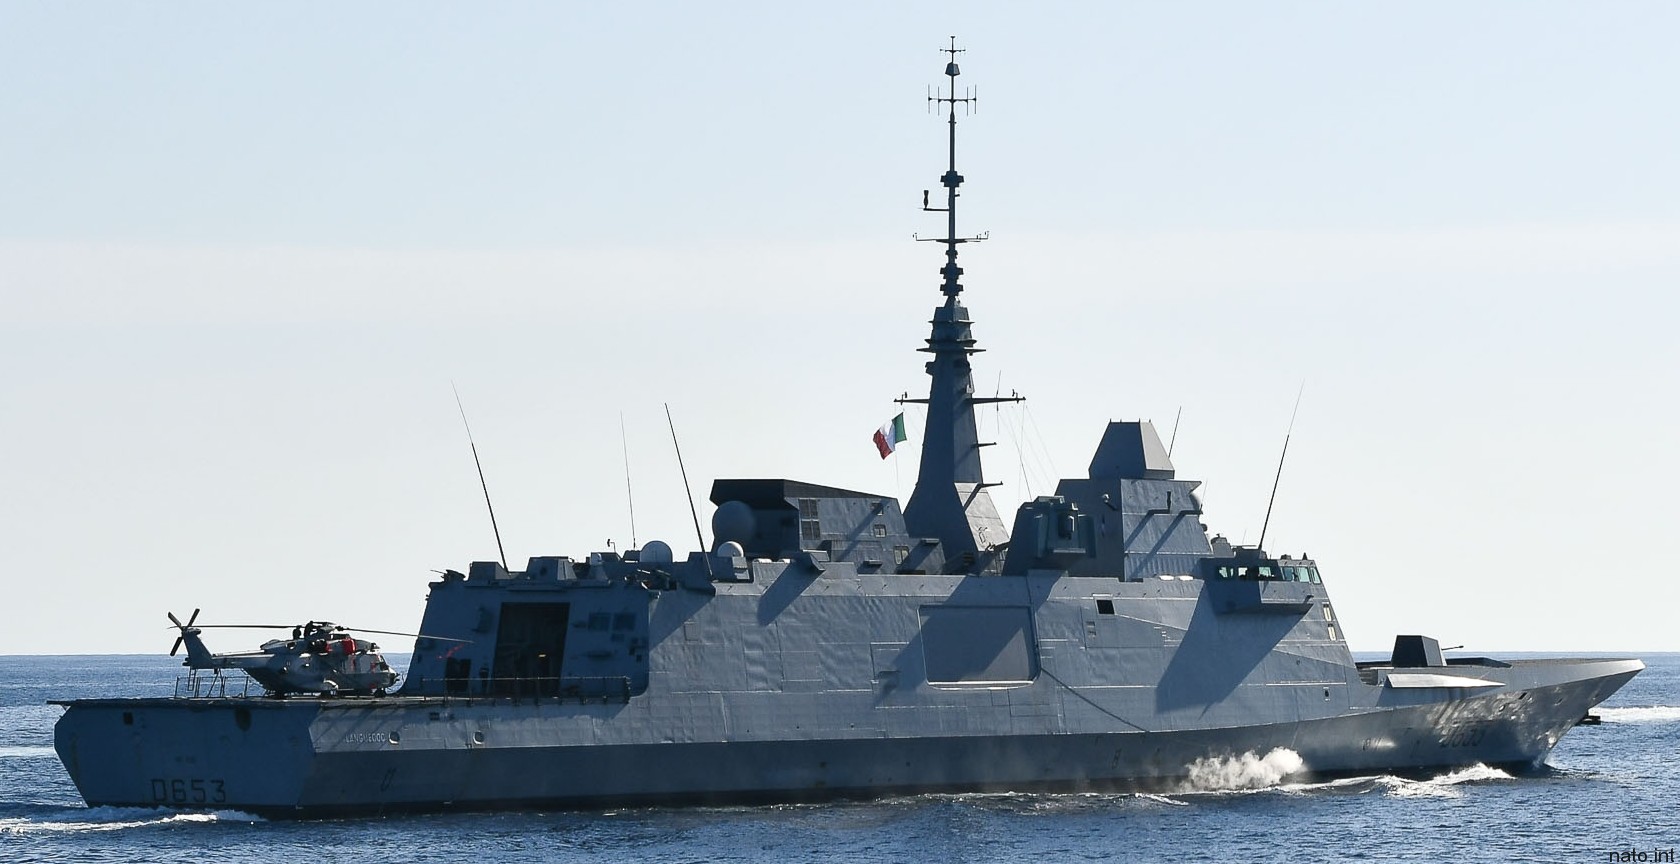 d-653 fs languedoc fremm aquitaine class frigate fregate multi purpose french navy marine nationale 19